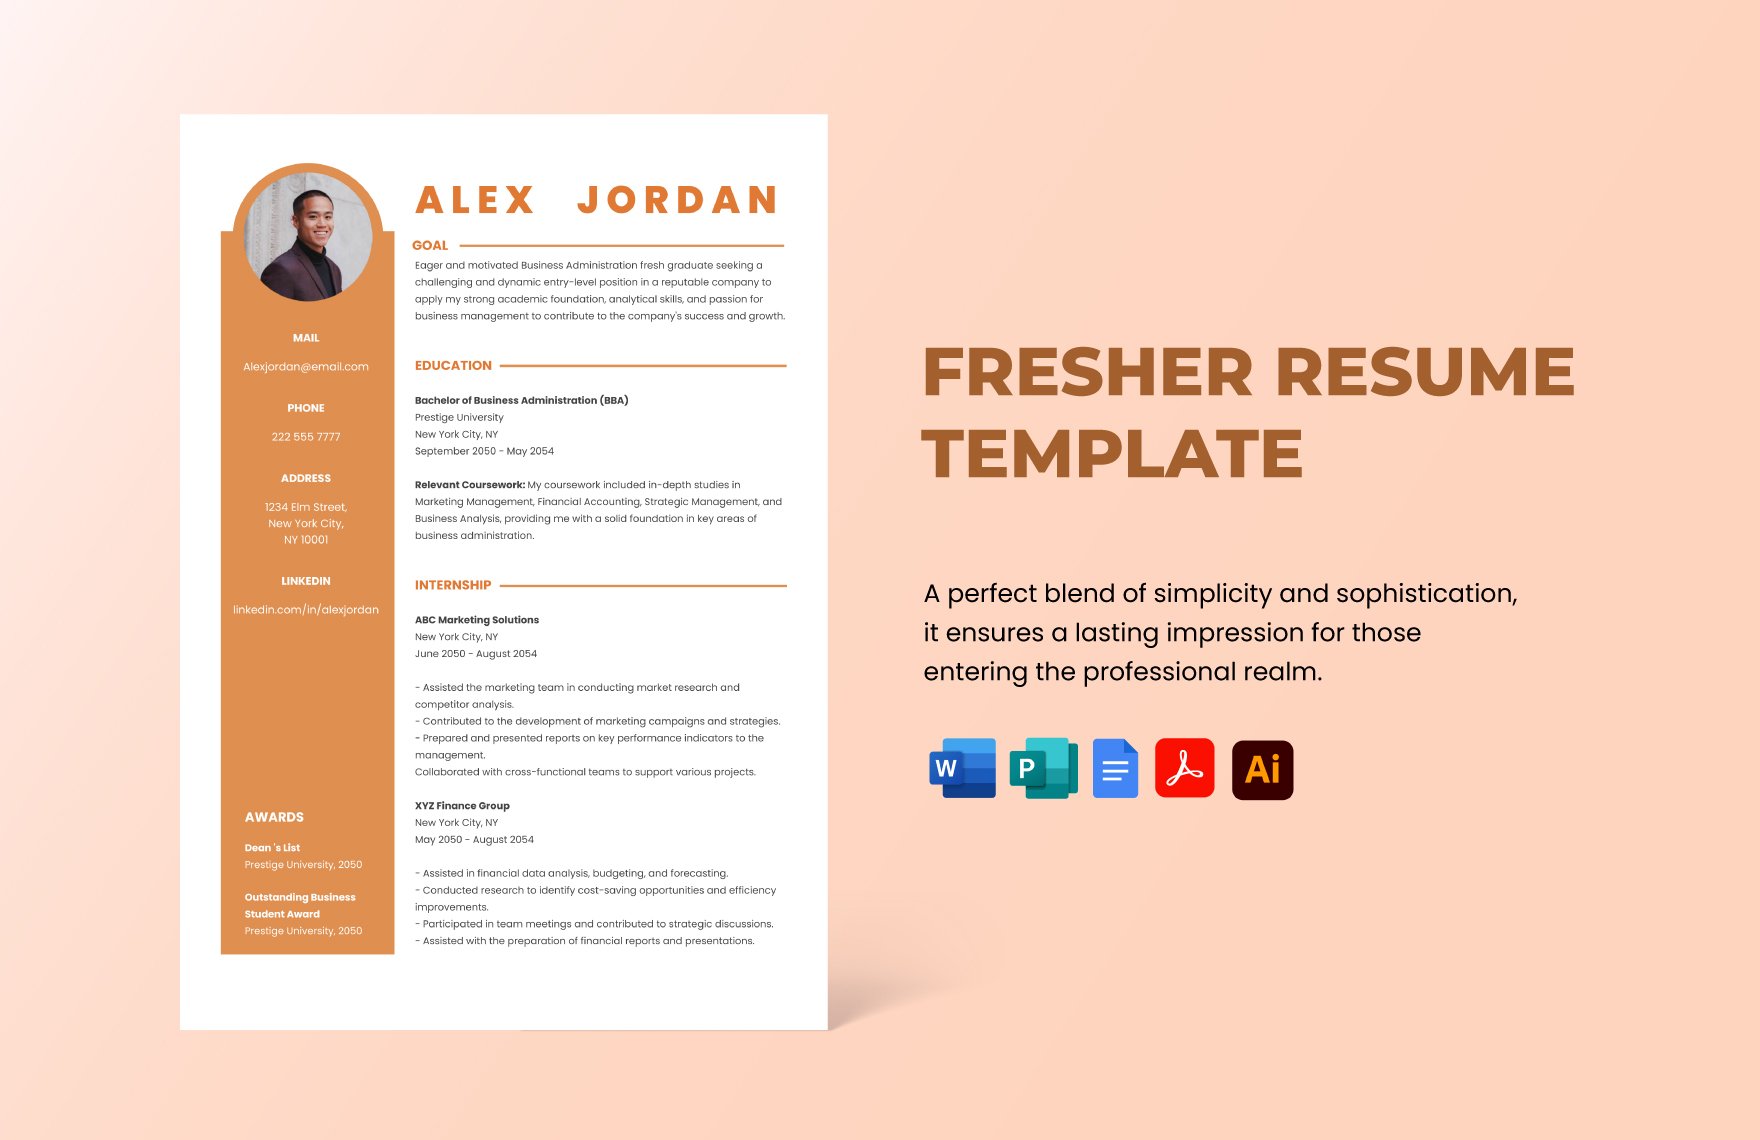 Fresher Resume Template